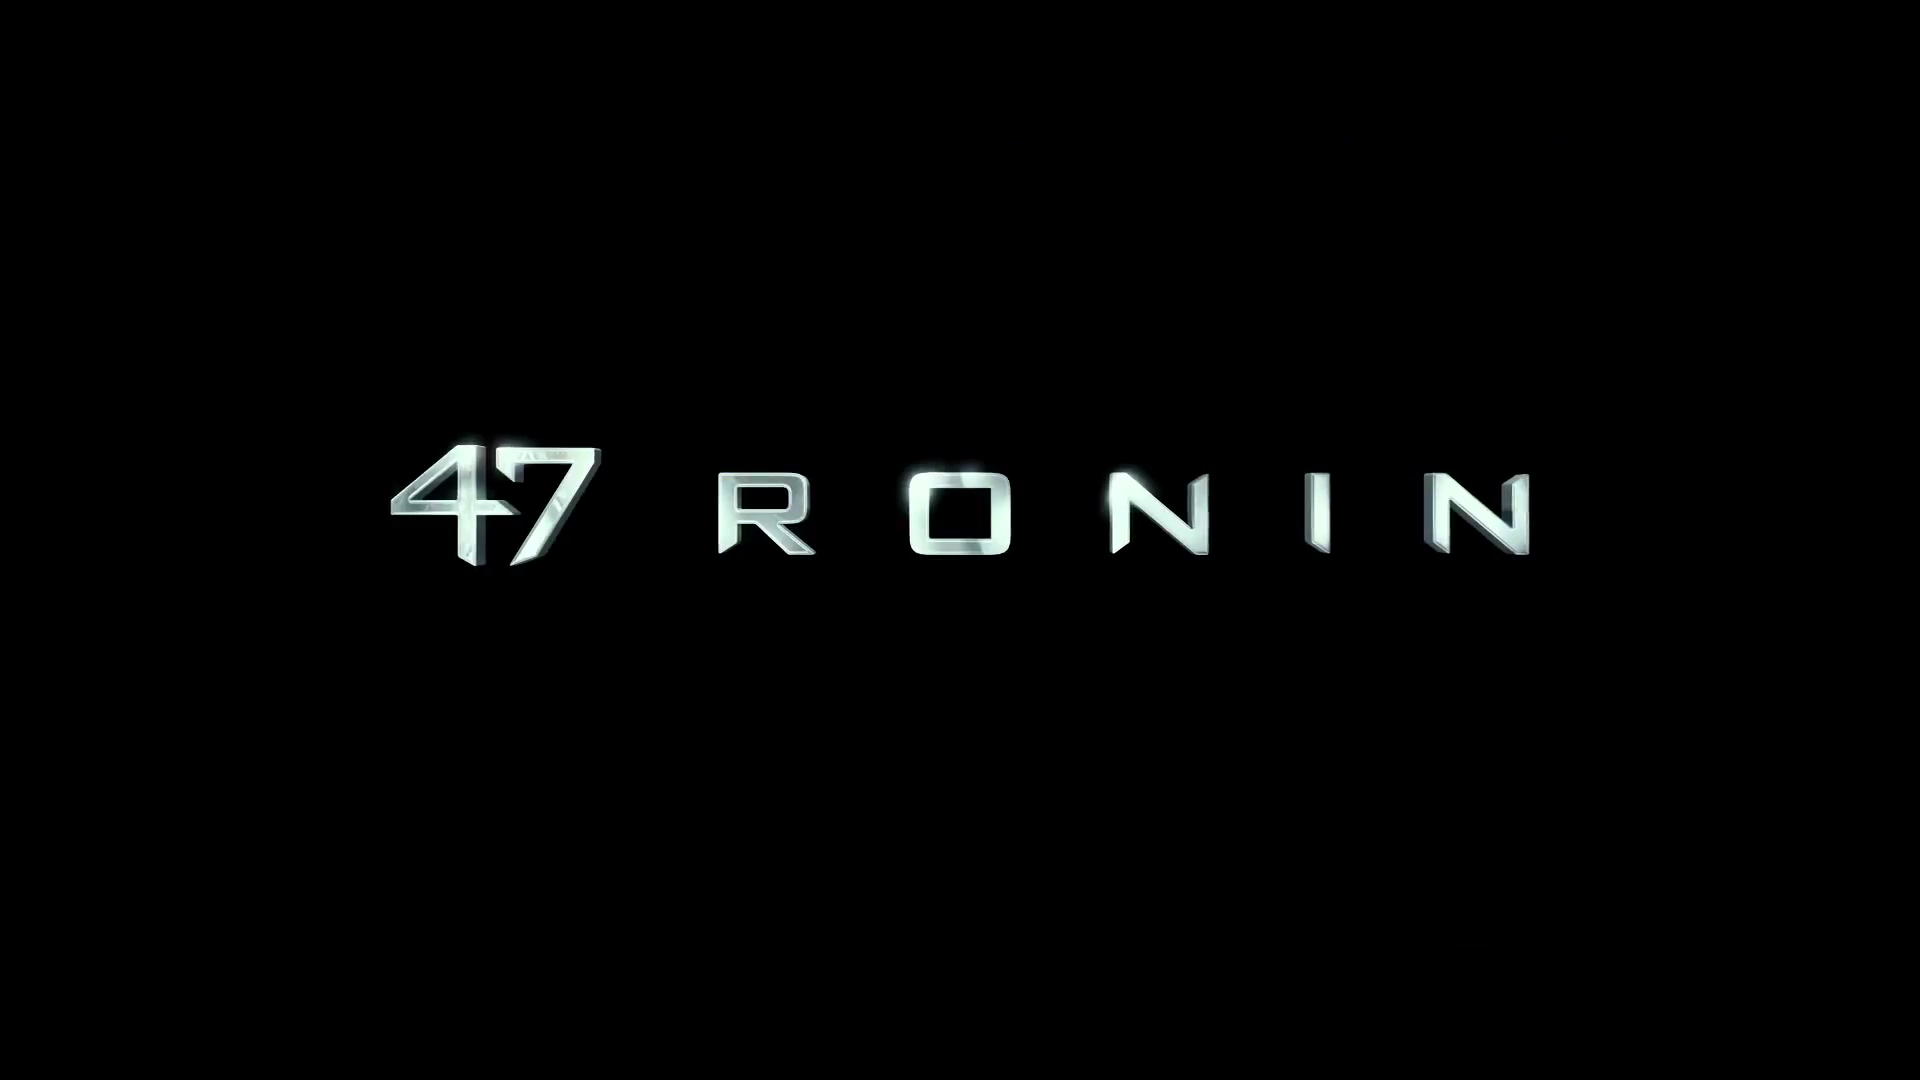 ronin Logo photo - 1